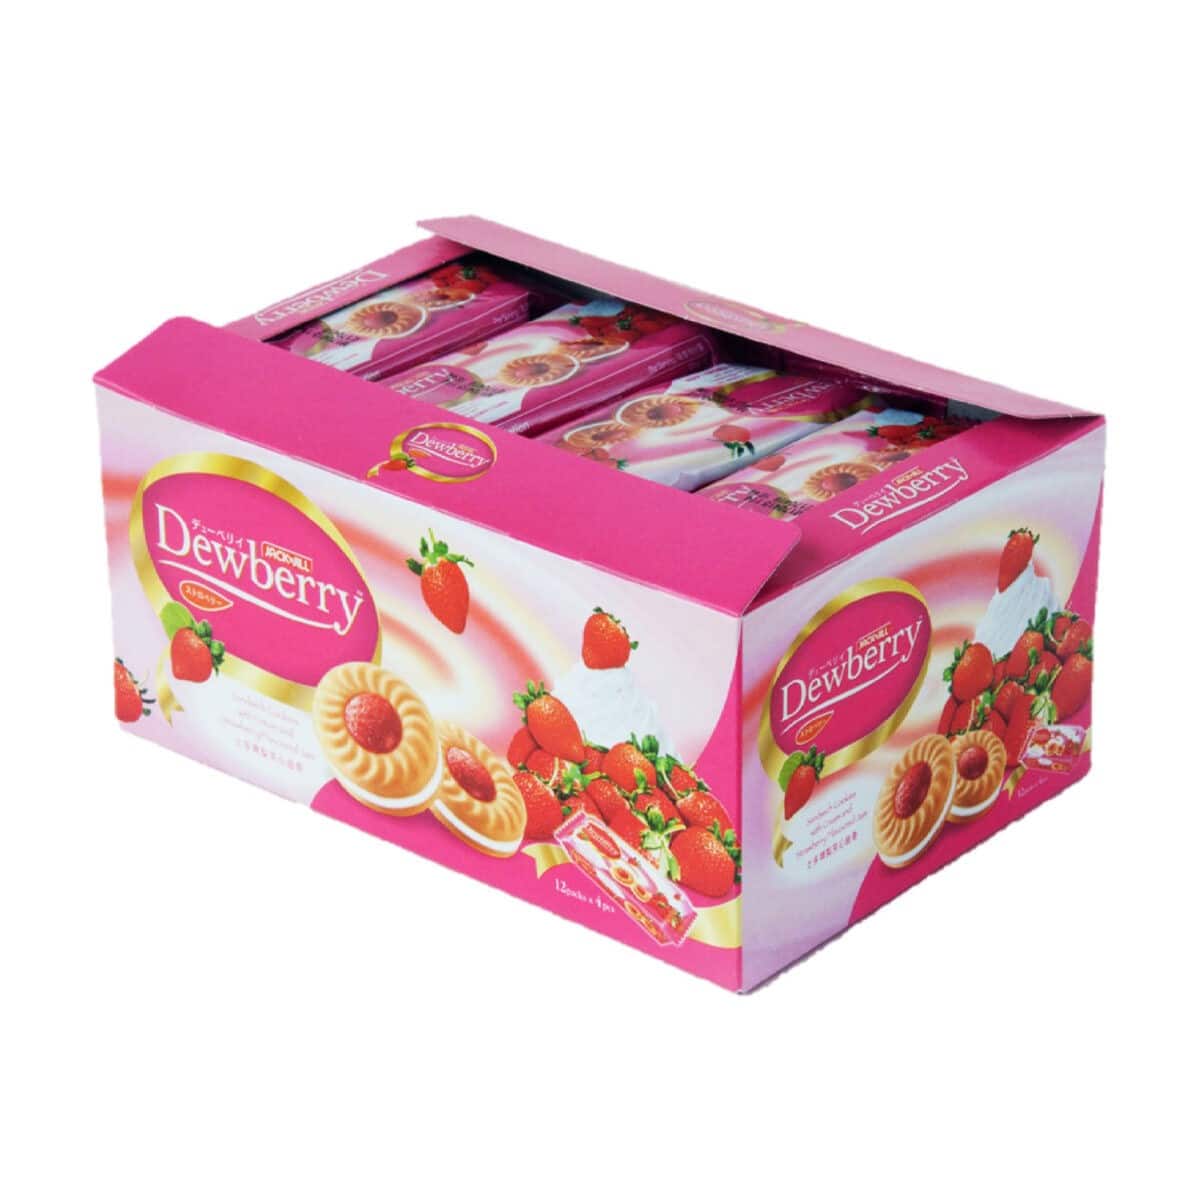 Dewberry biscuit strawberry flavors